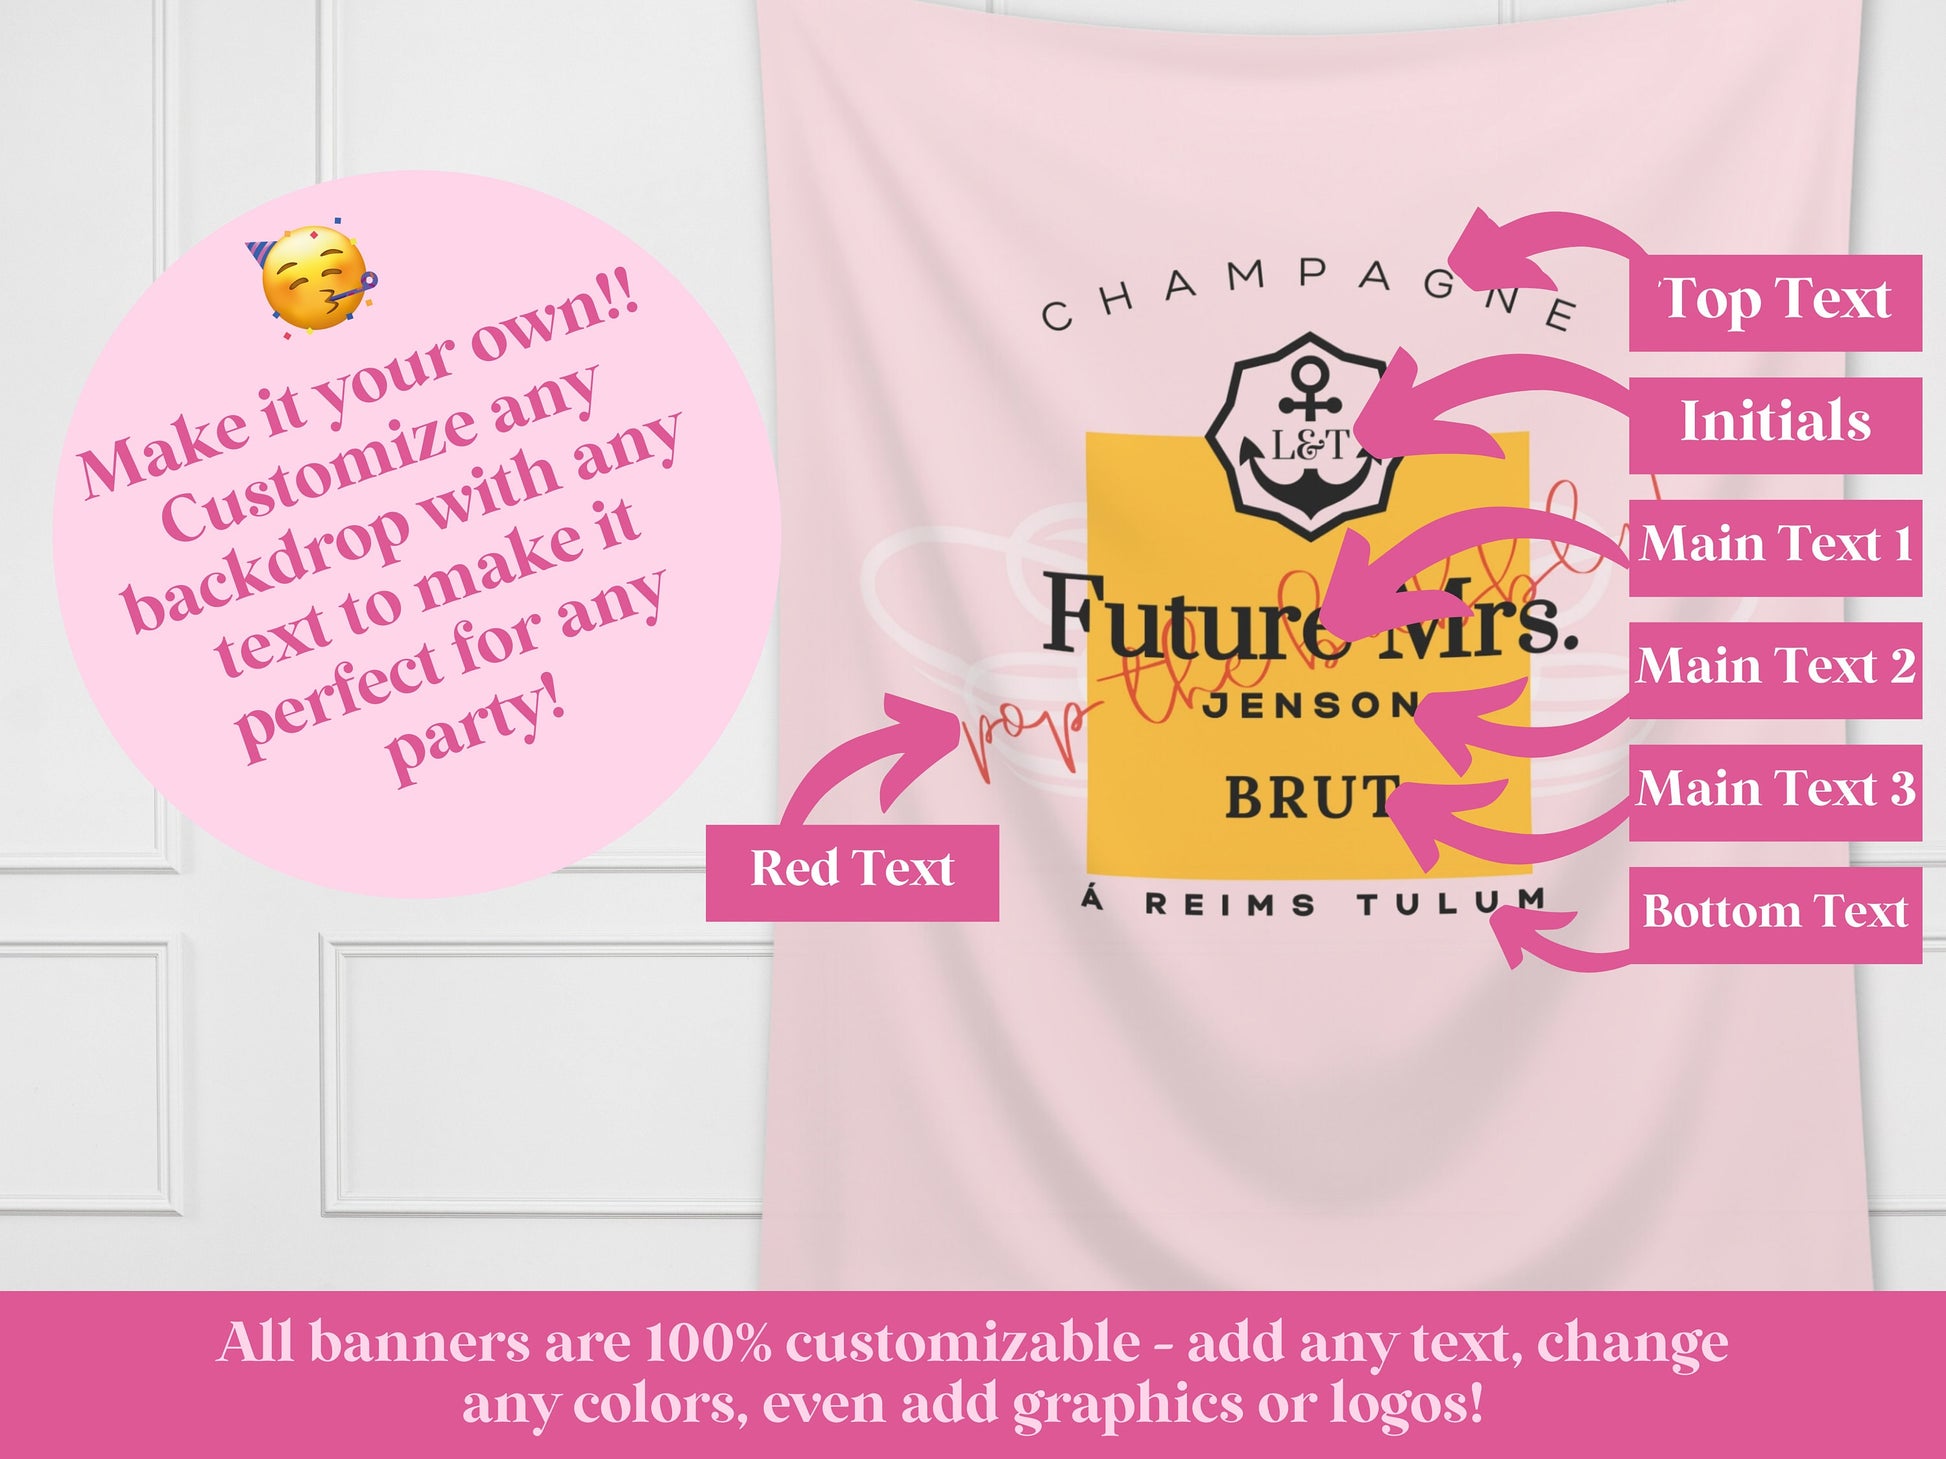 Custom Champagne Bachelorette Party Banner | Champagne Before Vows | Last Rendez Vous Décor | Personalized Label Bridal Shower Backdrop